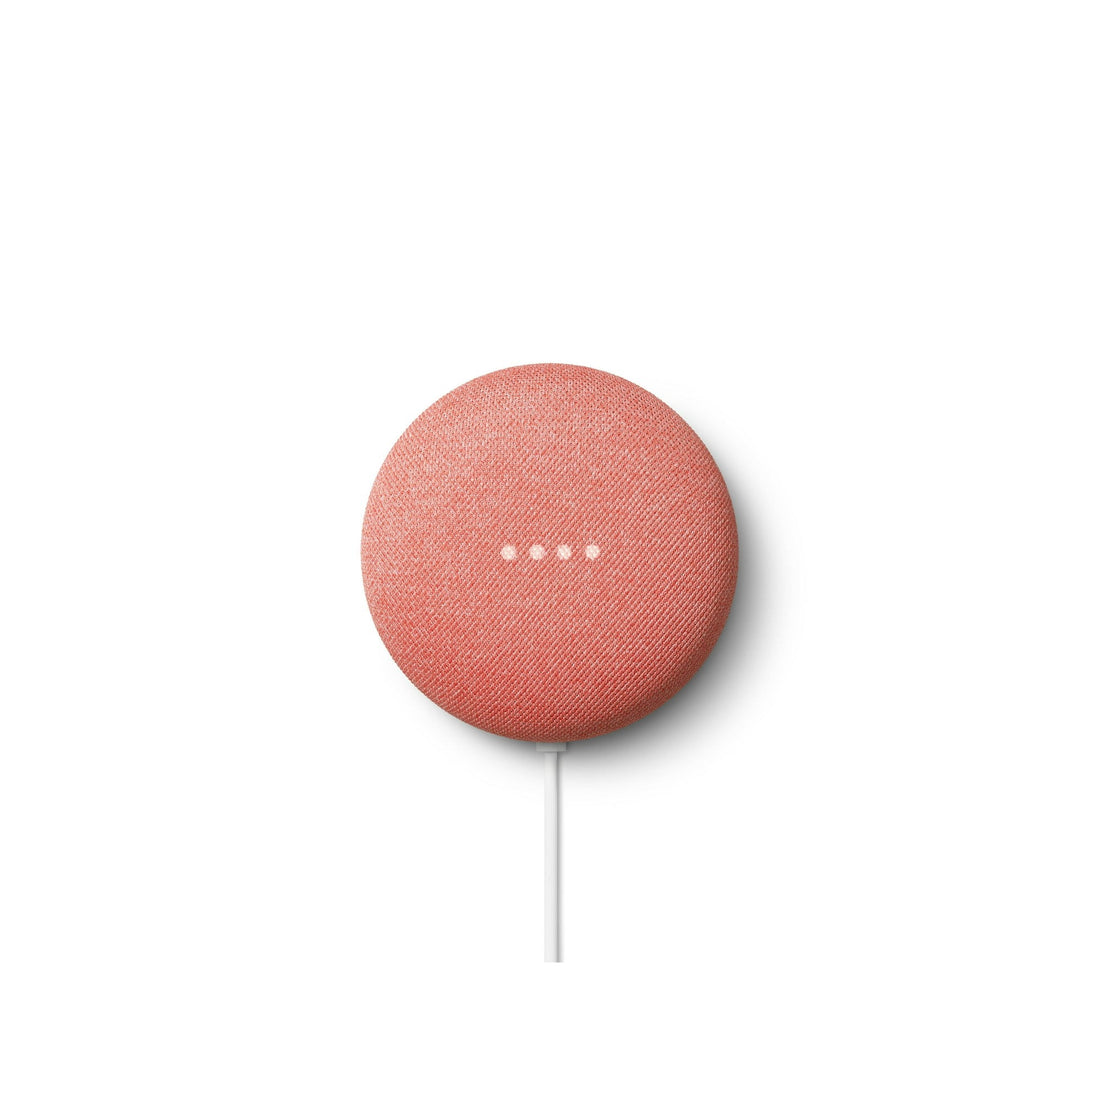 Google Home Mini Smart Speaker w/ Google Assistant - Coral Pink